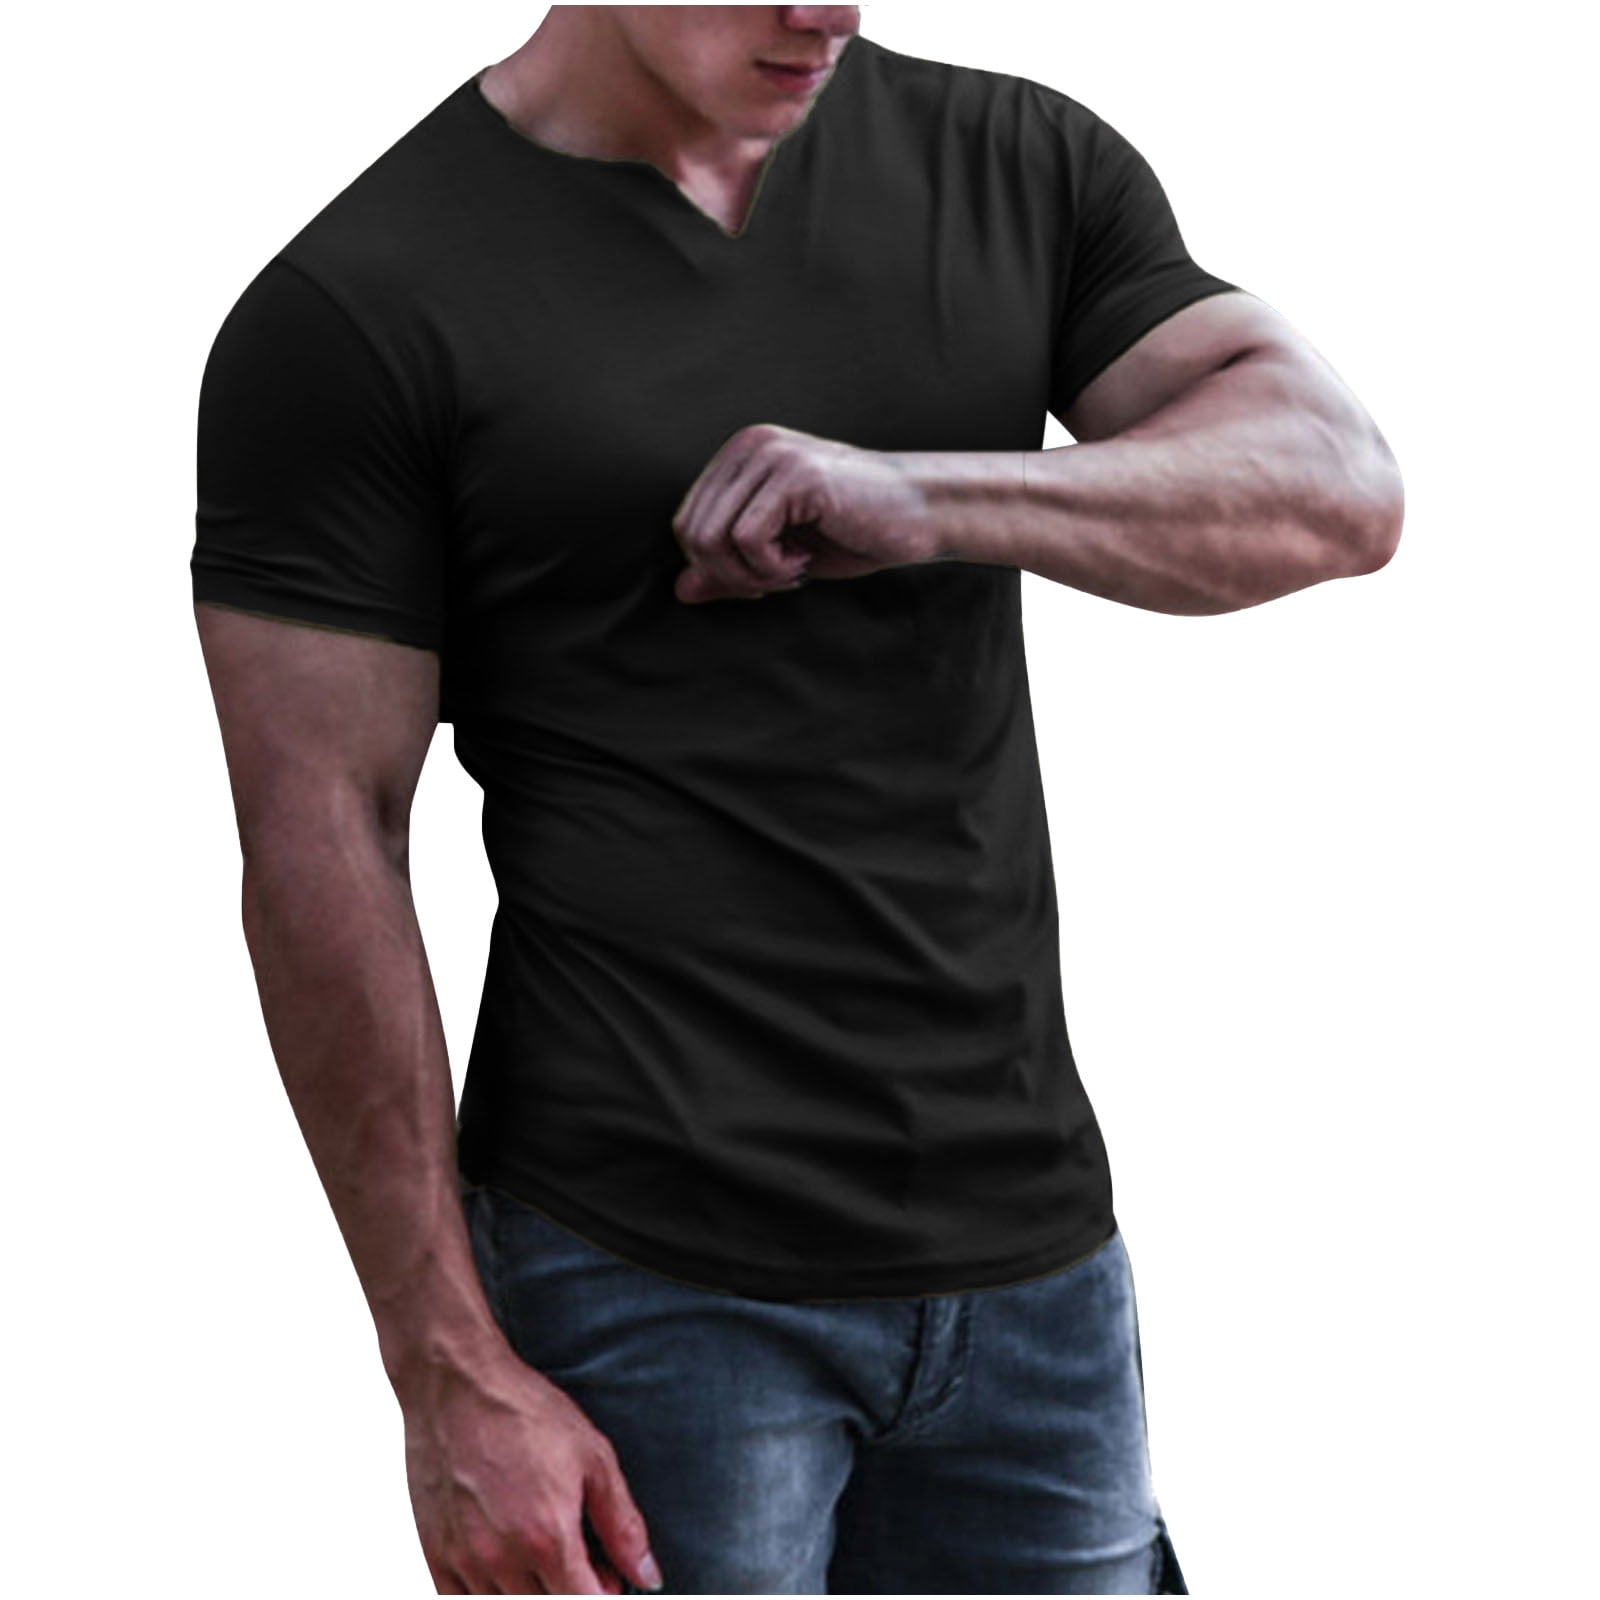 HAPIMO Solid Color Blouse V-Neck Fashion Tops Short Sleeve T-Shirt